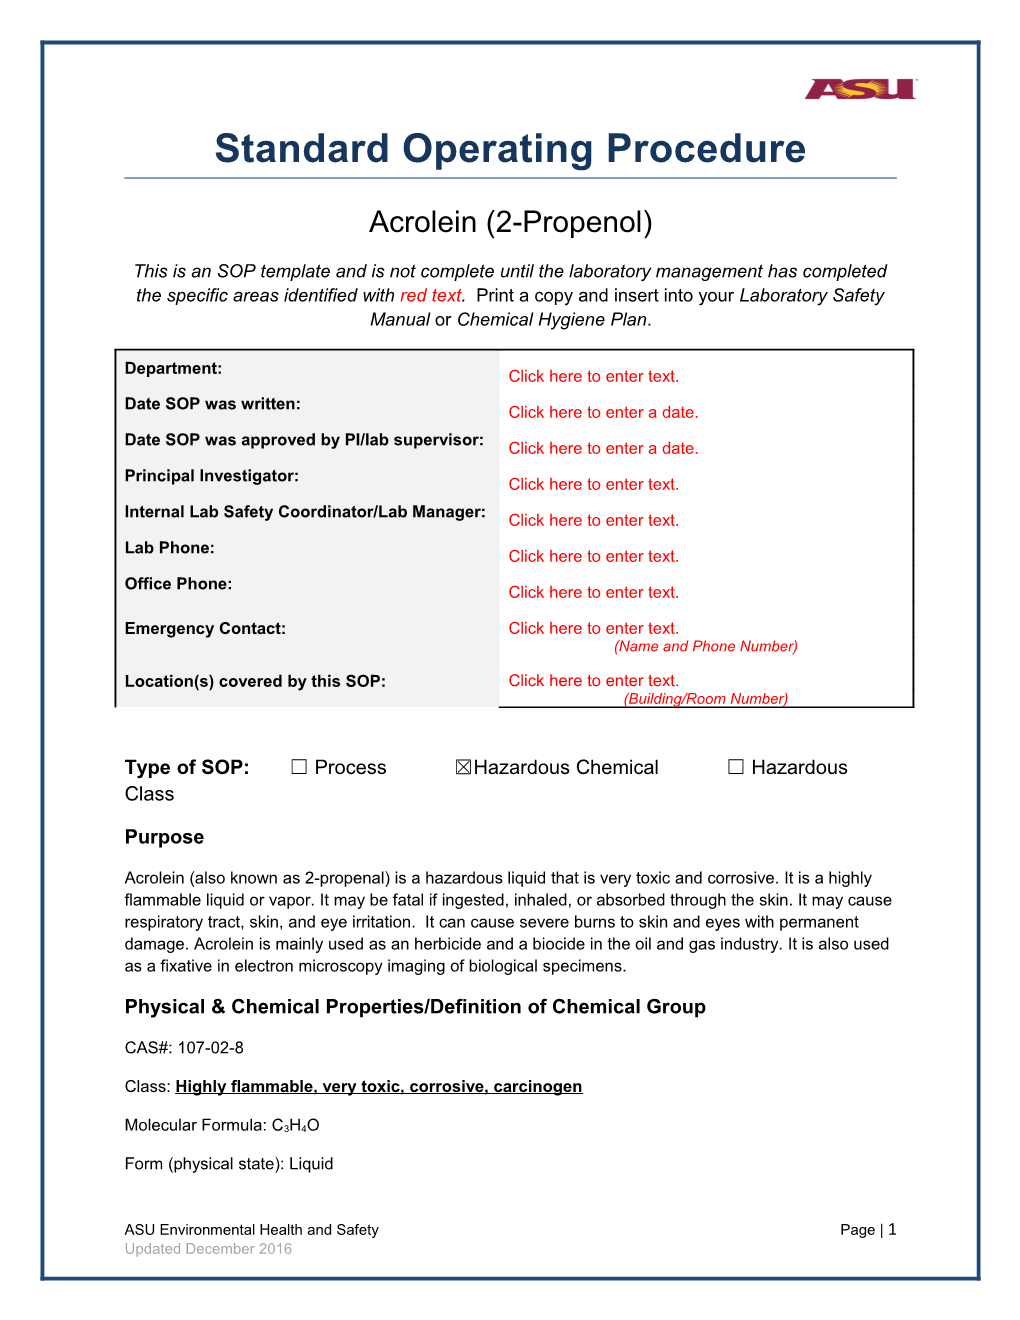 Type of SOP: Process Hazardous Chemical Hazardous Class s4